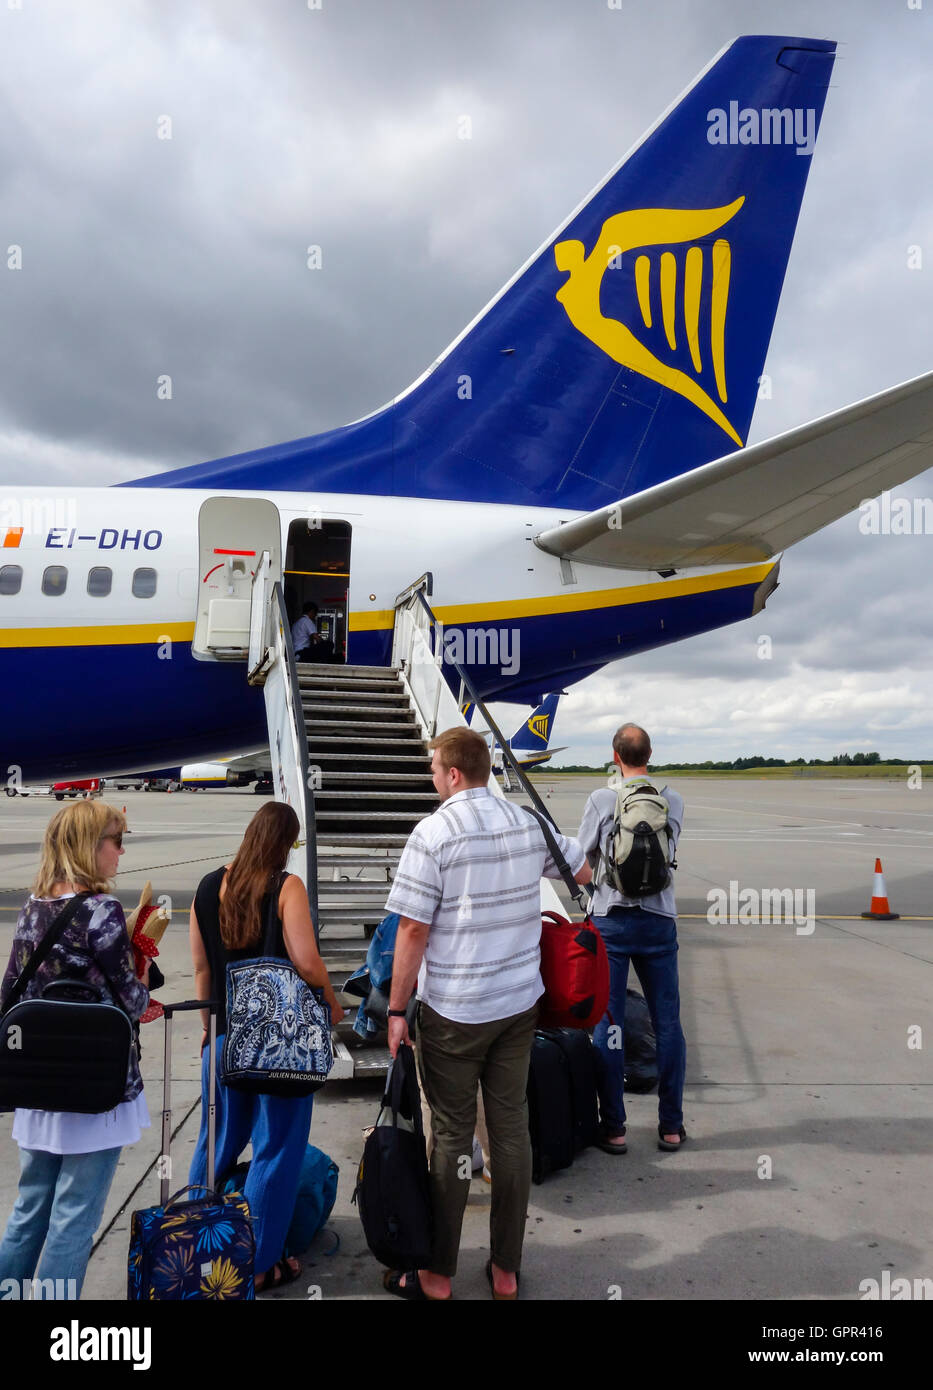 Boarding a Ryanair aircraft Stock Photo